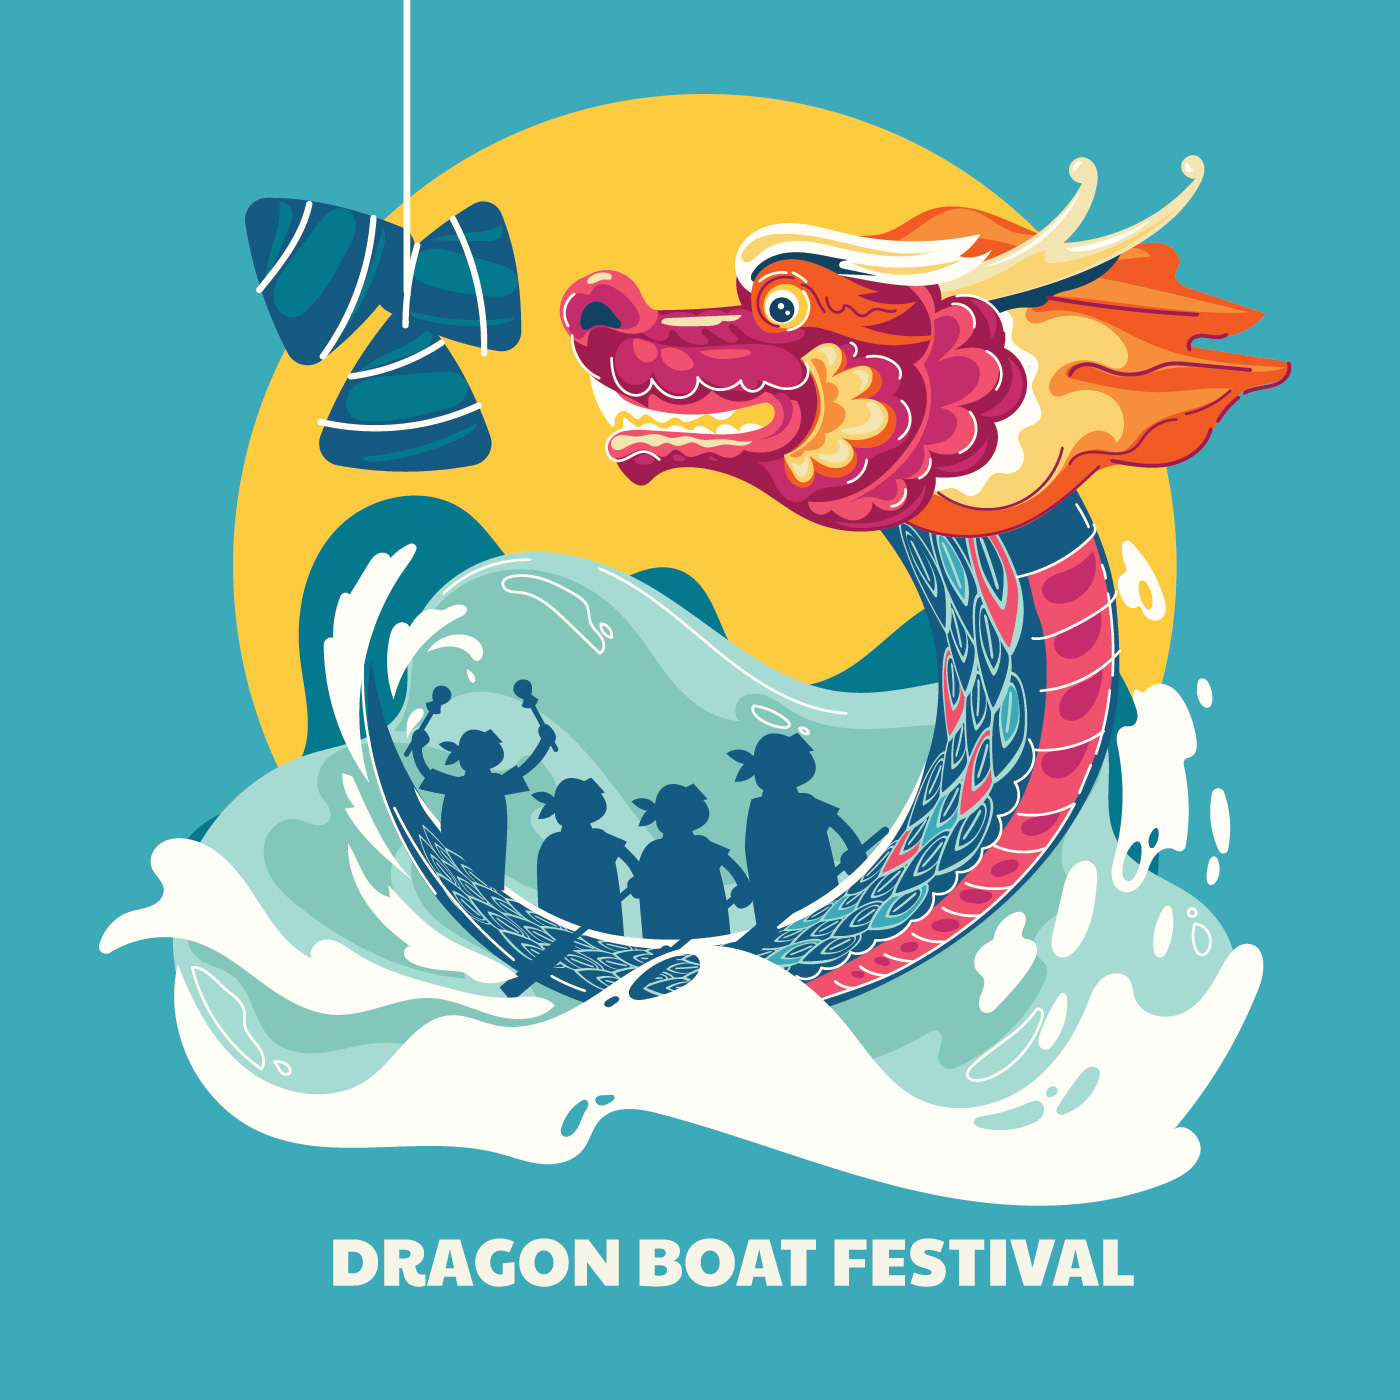 Dragon Boat Festival Illustration 463880 - Download Free ...